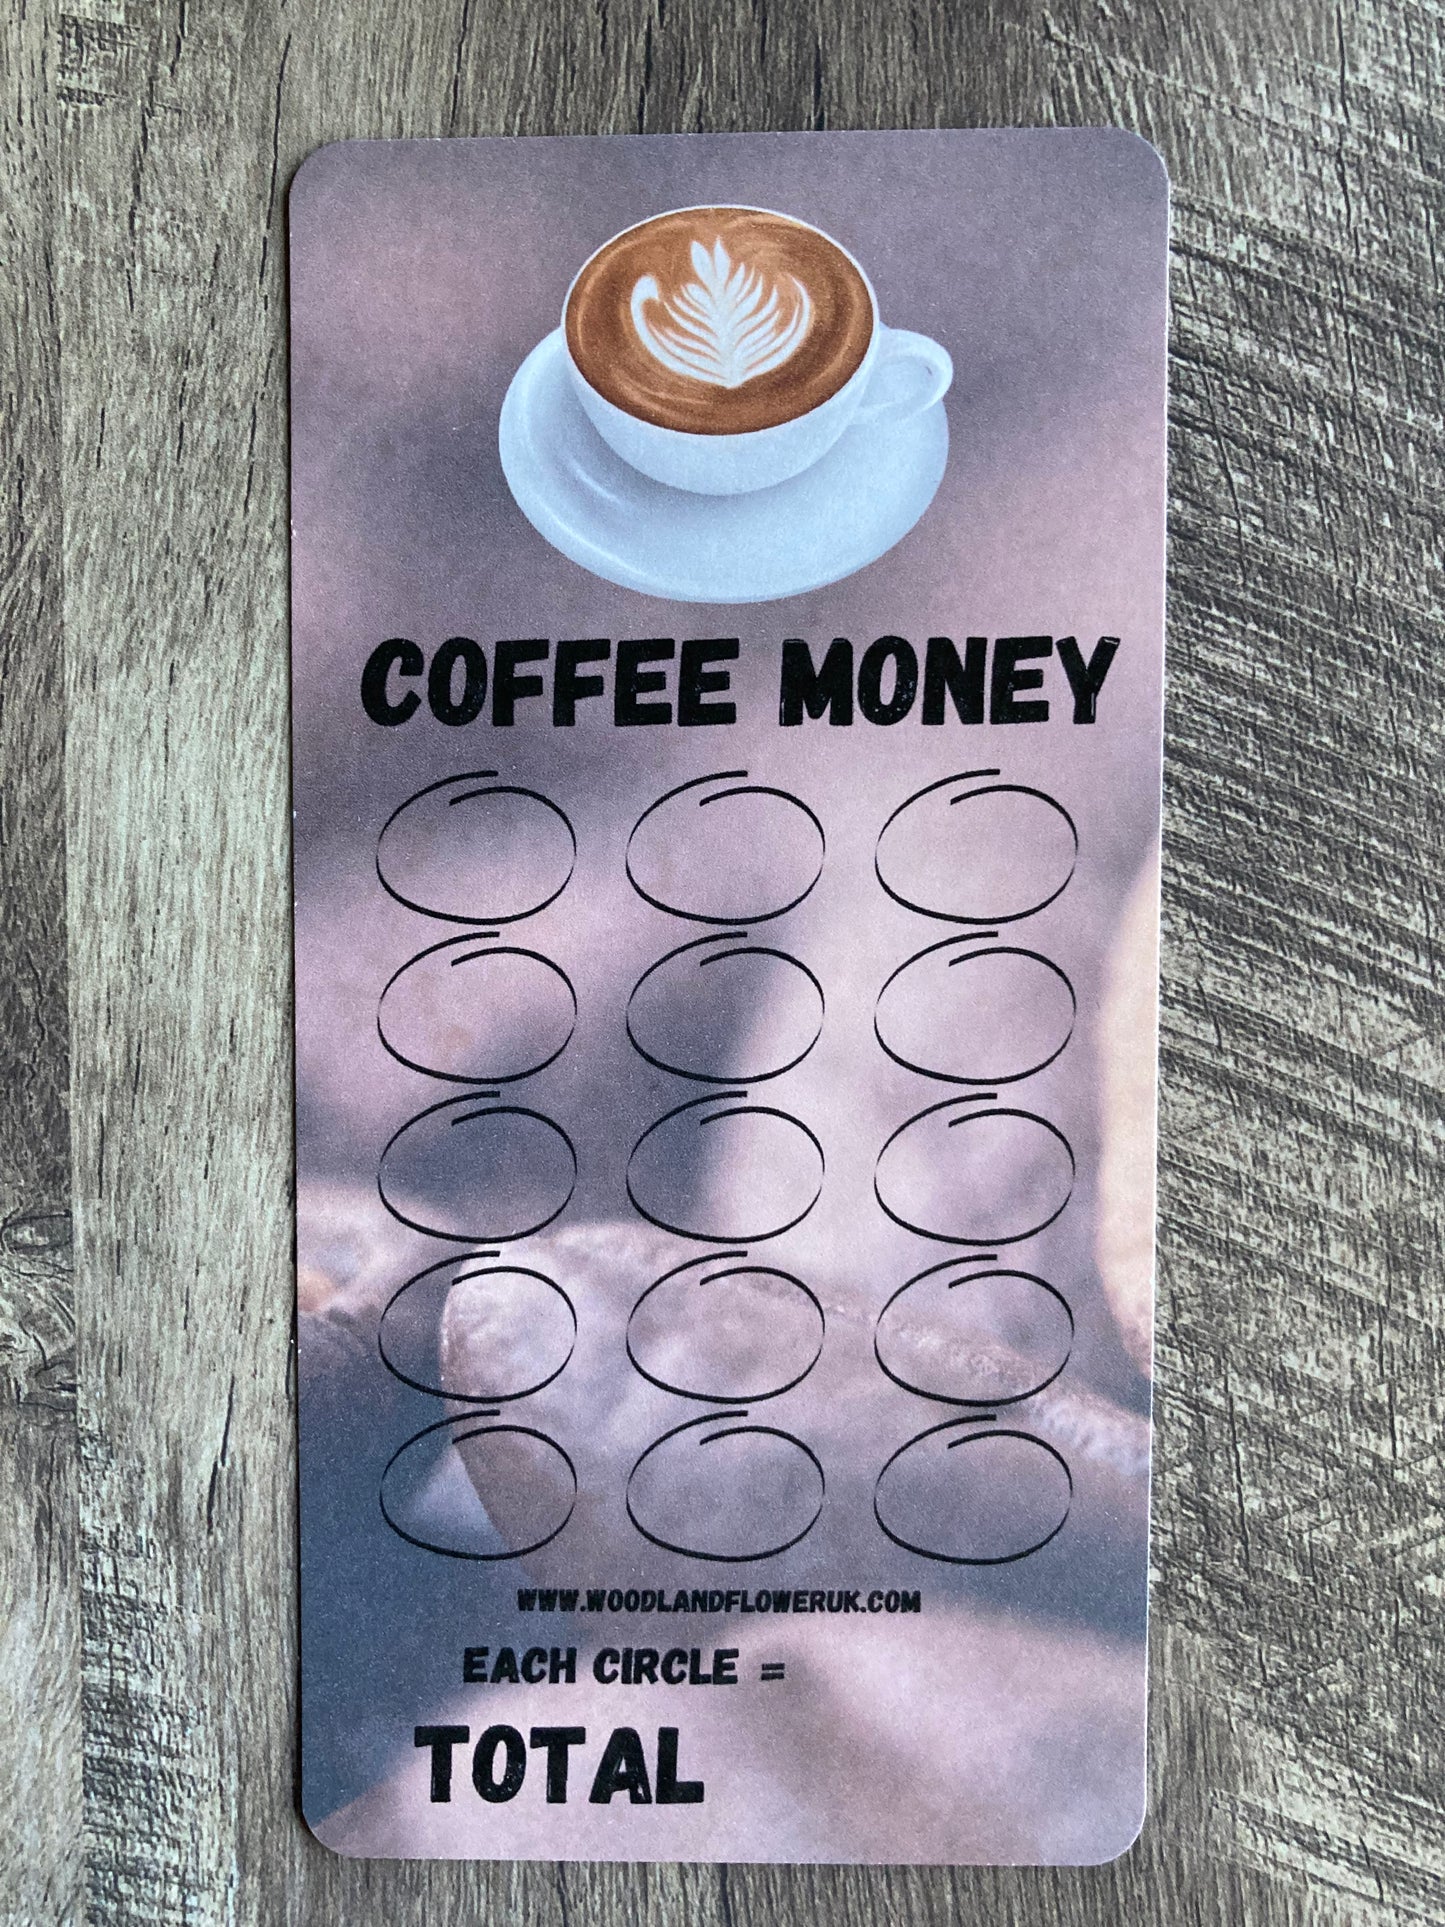 Saving challenge “coffee money”